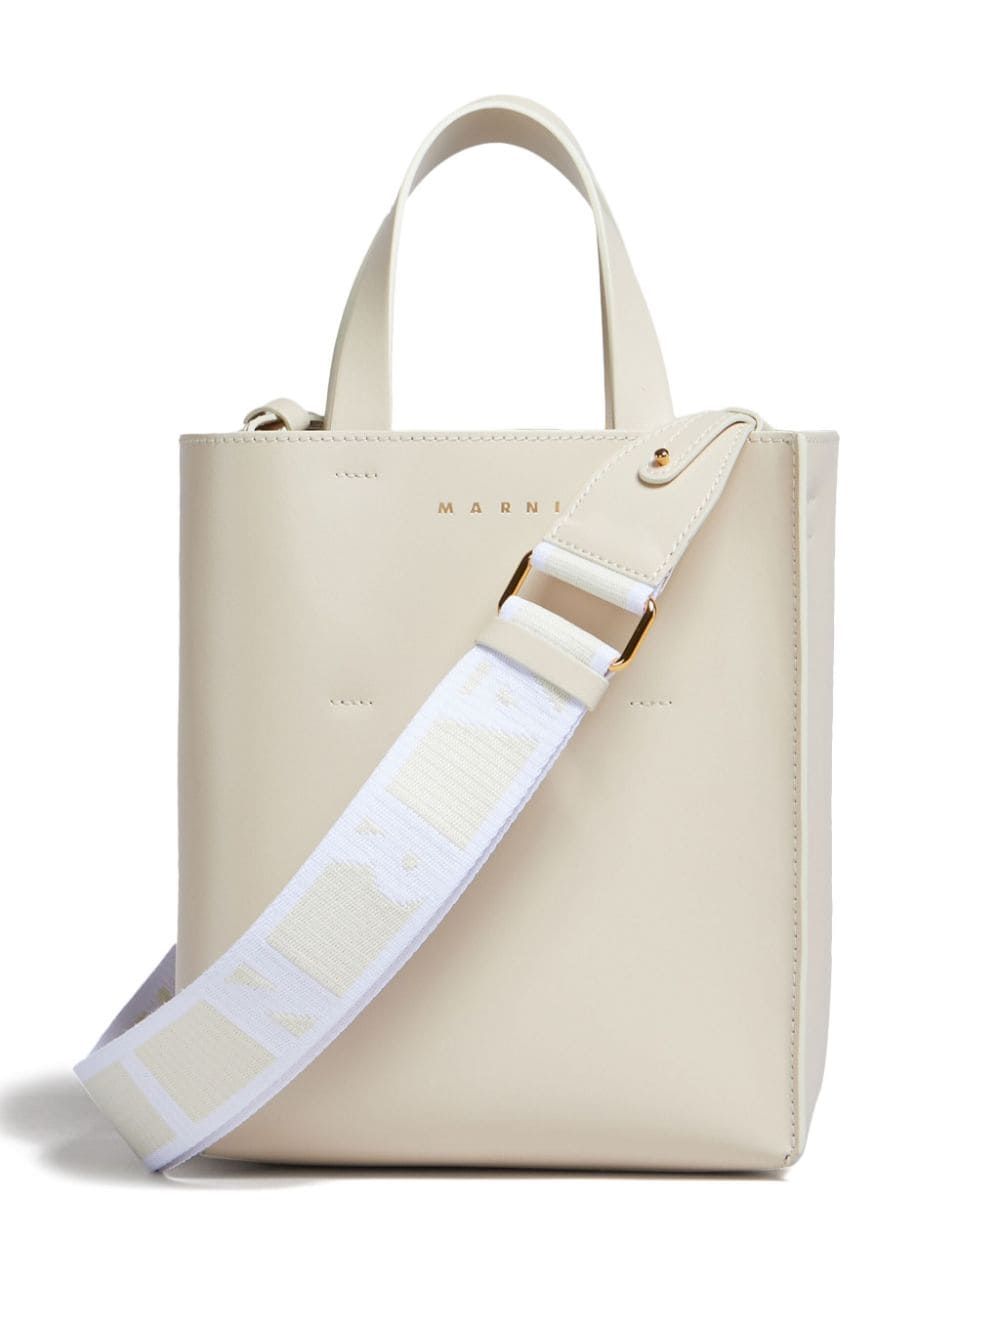 MARNI Mini Museo Ecru White Leather Tote Handbag with Gold-Tone Accents and Adjustable Strap